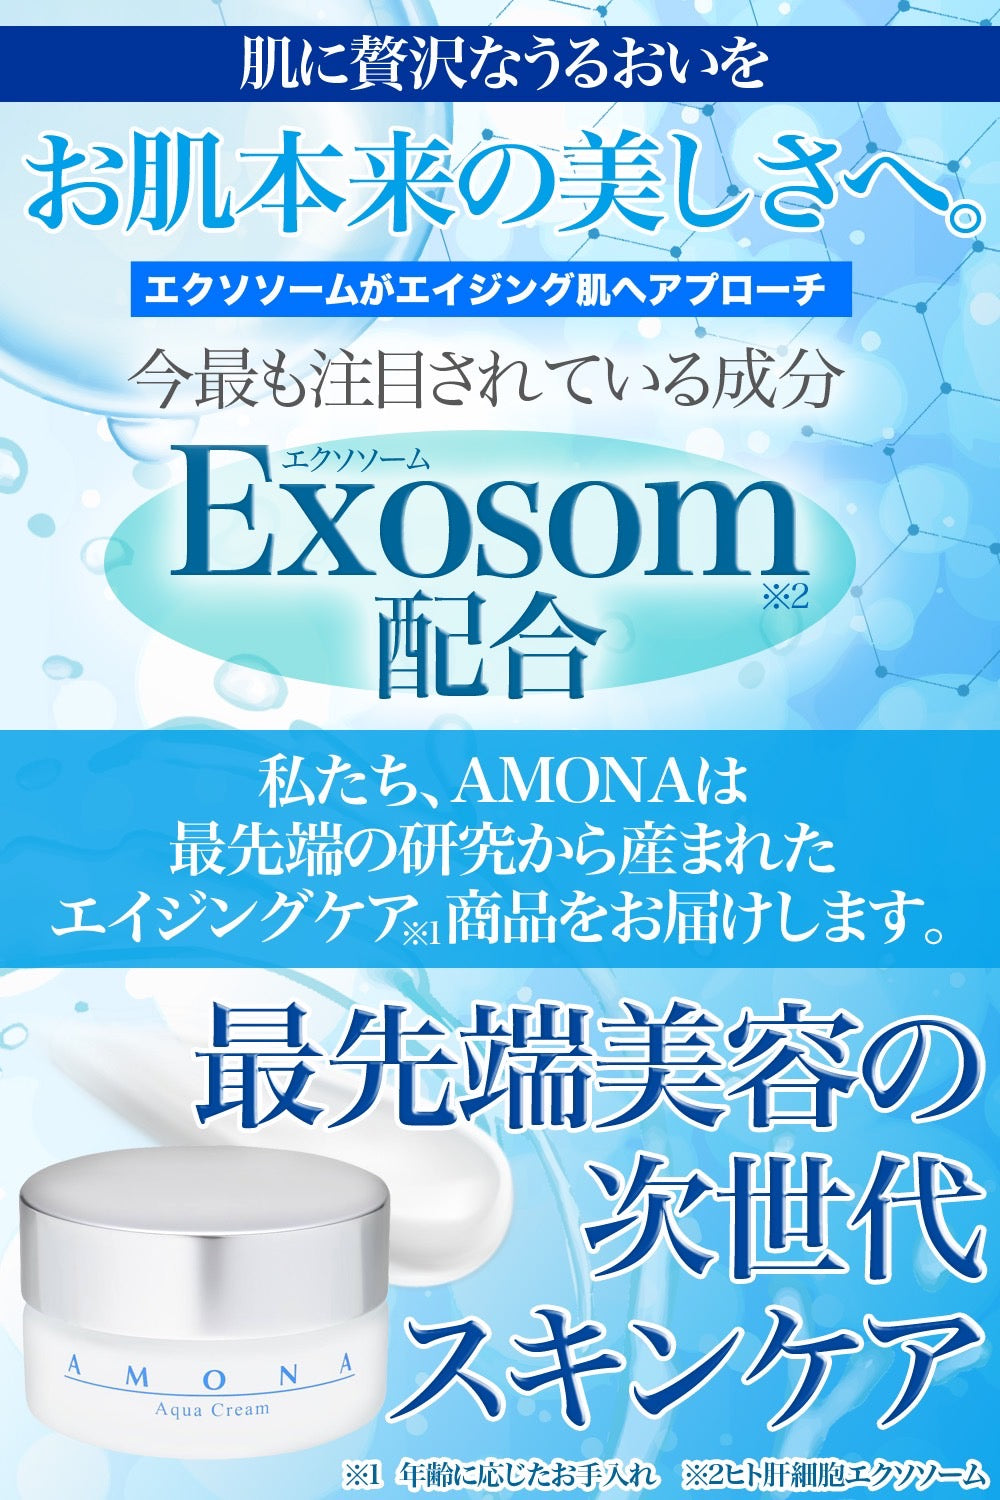 AMONA ヒト幹細胞エクソソーム 保湿クリーム